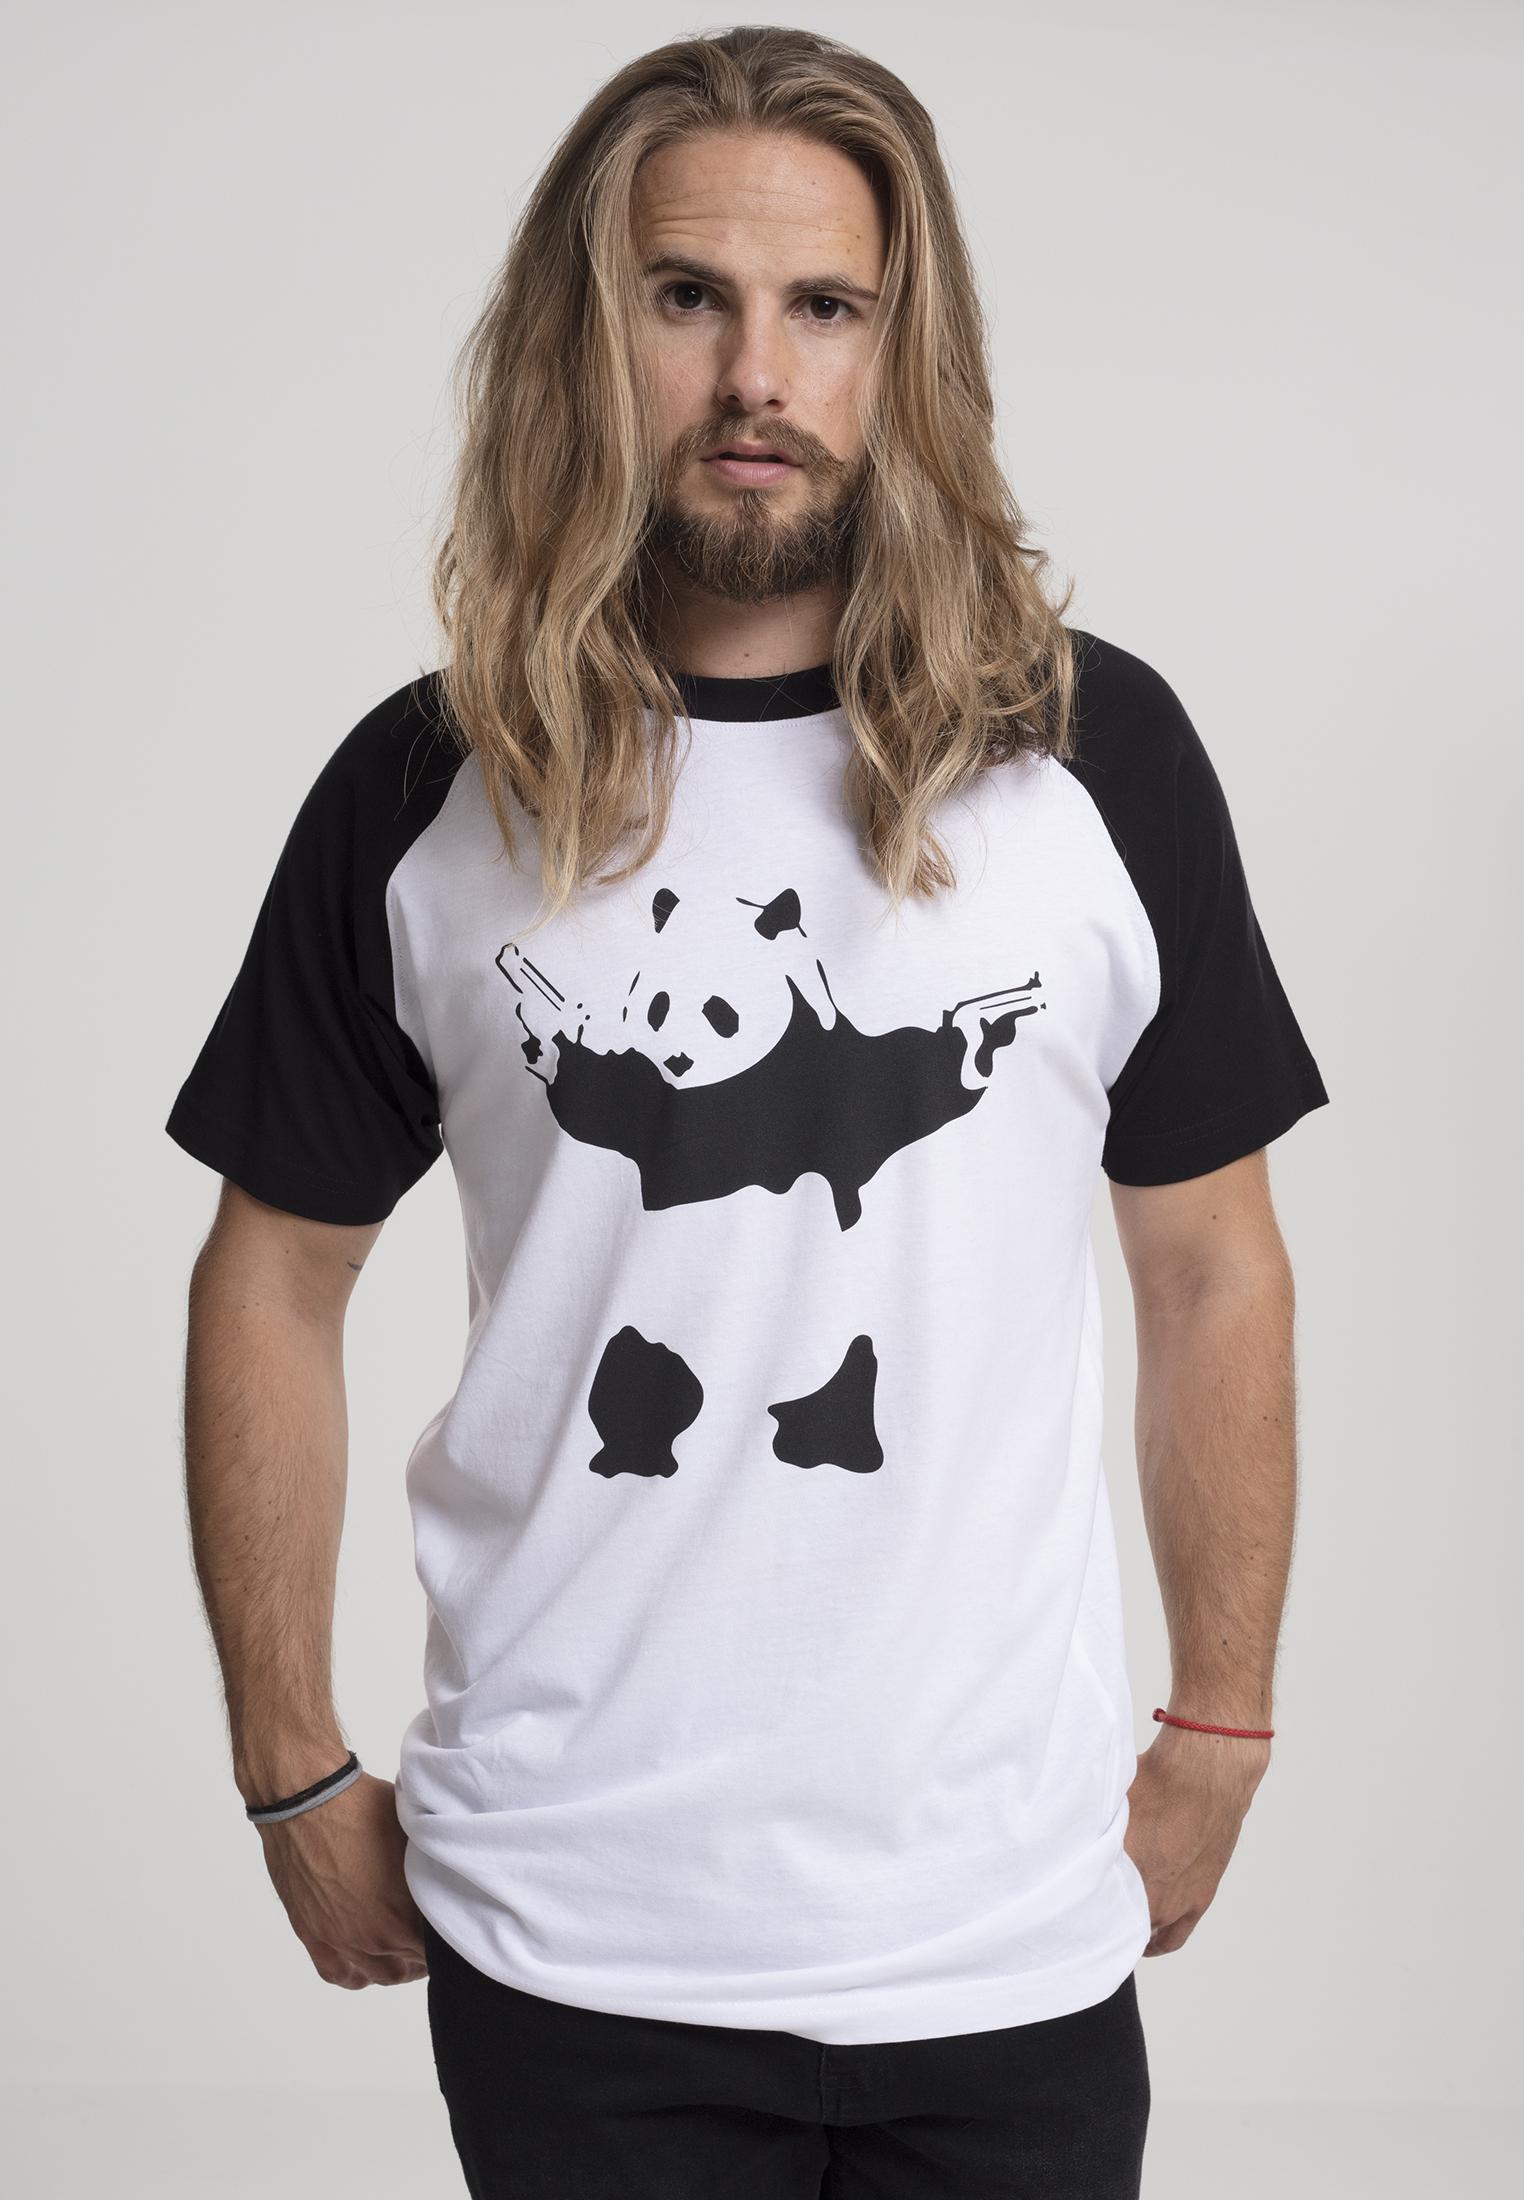 T-Shirts Brandalised - Banksy?s Graffiti Panda Raglan Tee in Farbe wht/blk